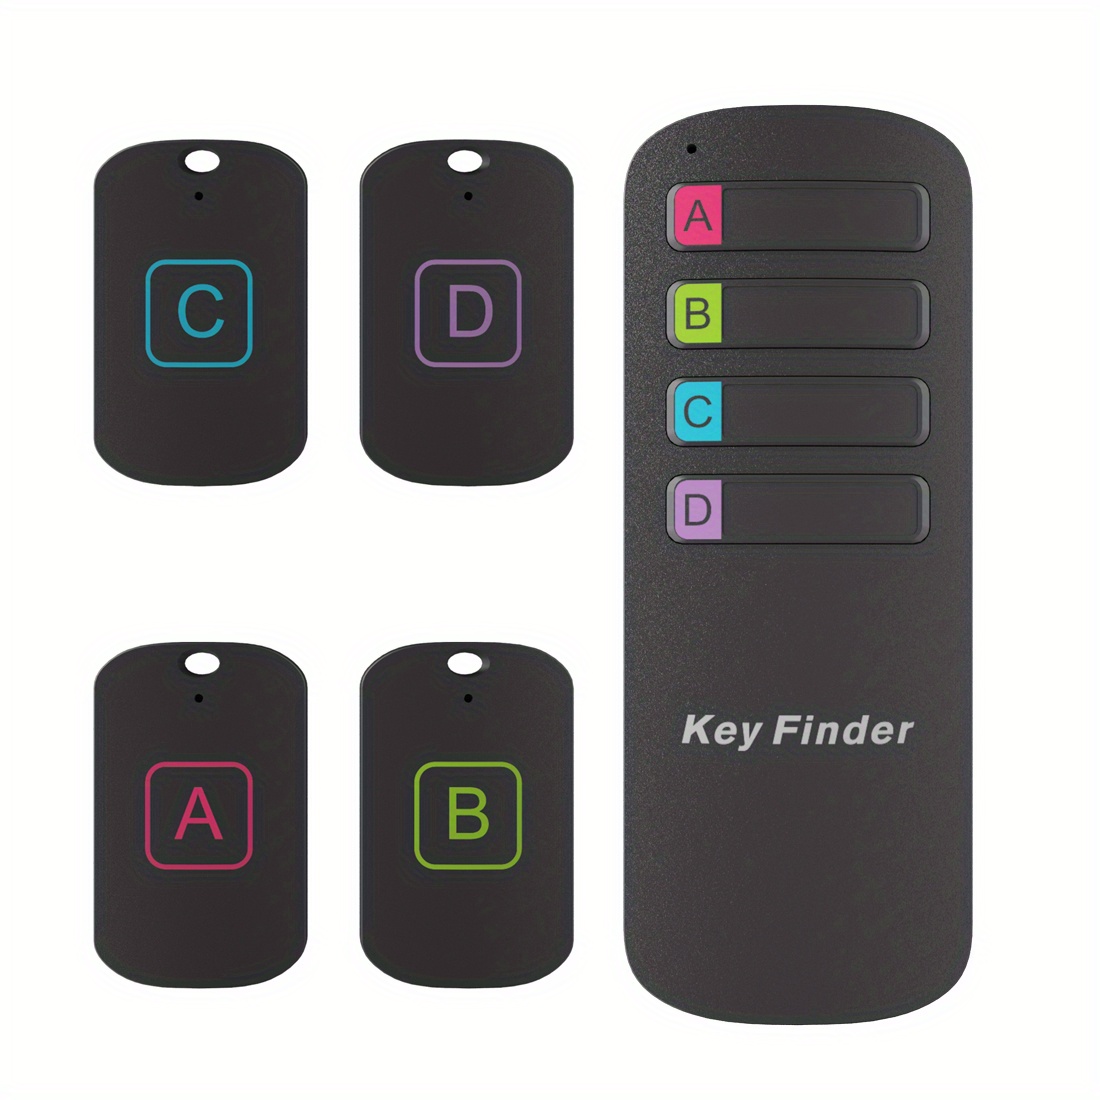 Key Finder,wireless Rf Locator Locator With Working Range,key